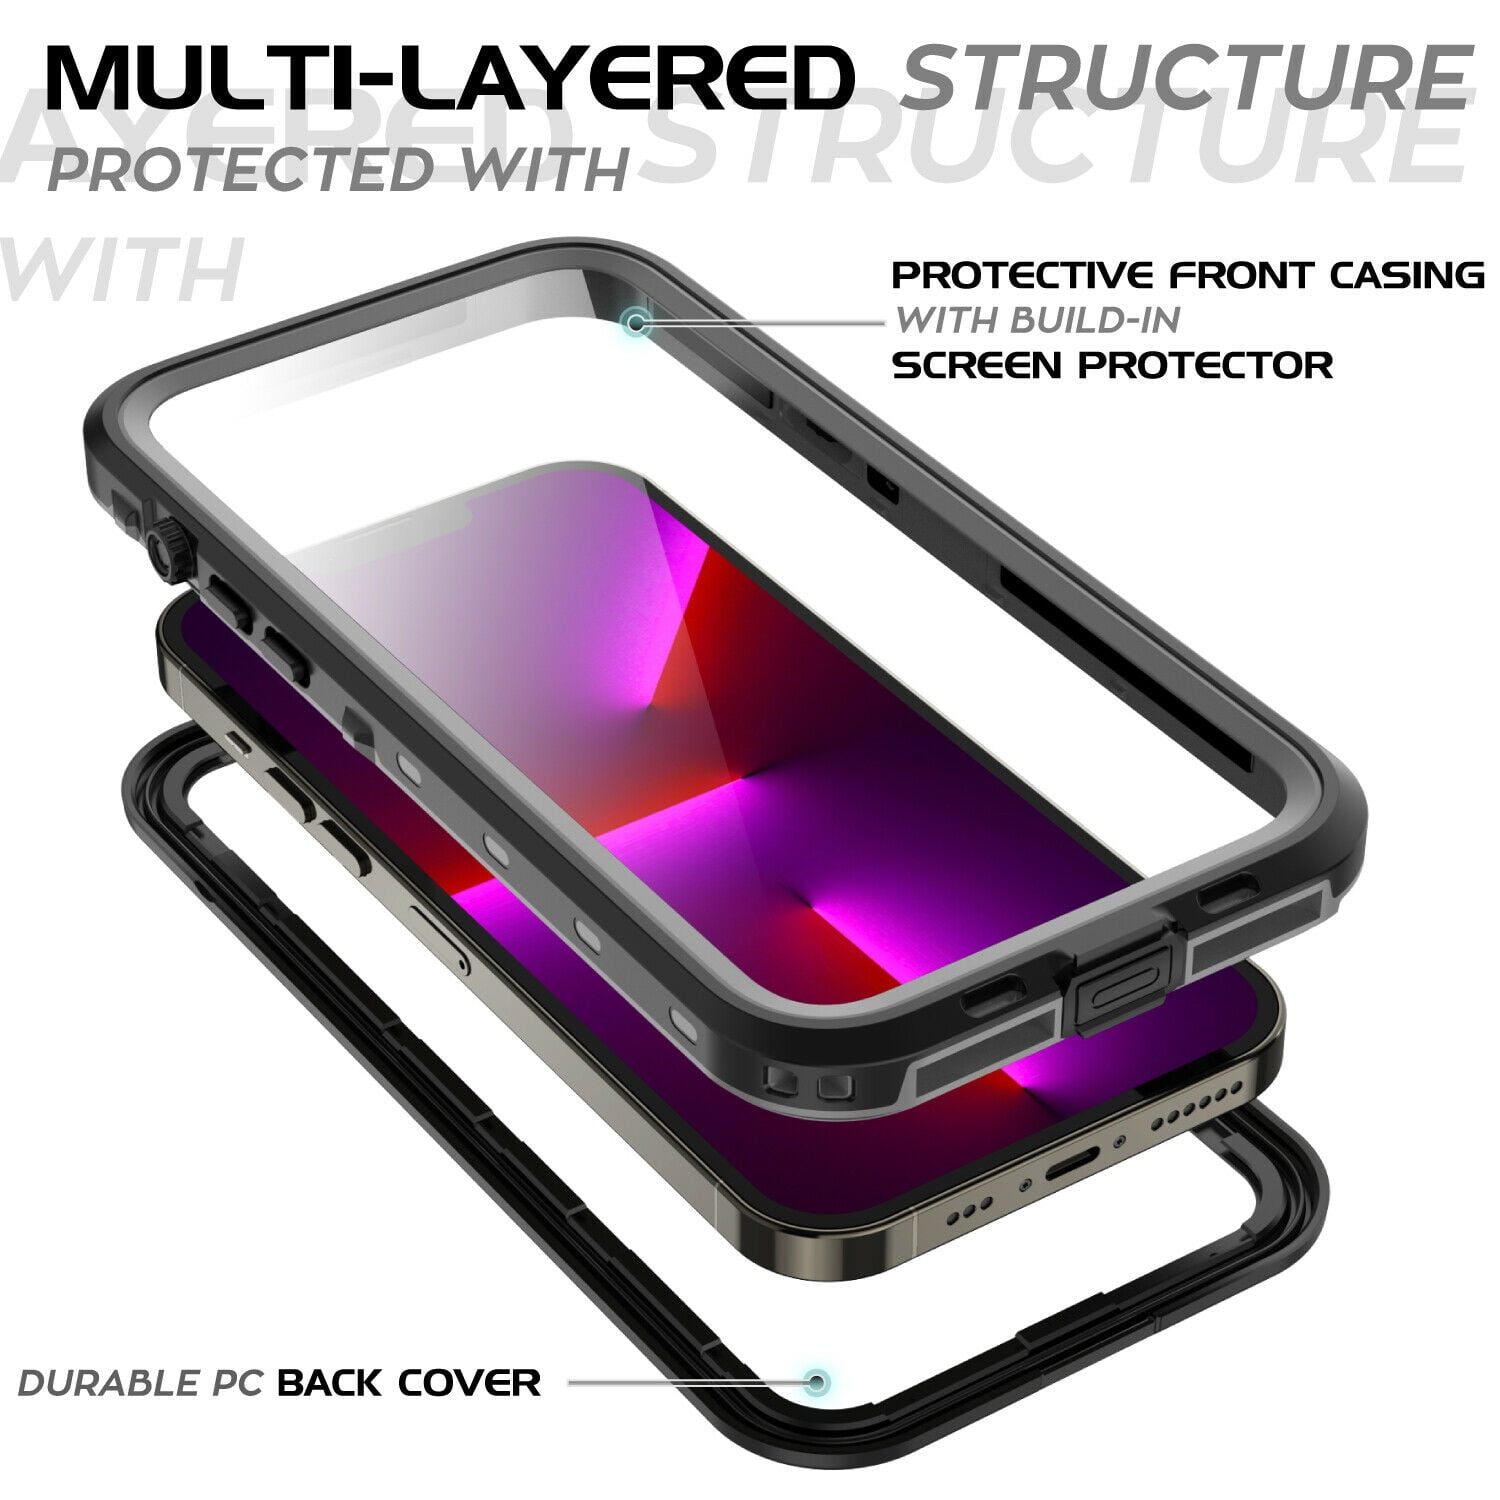 Waterproof & shockproof case for iPhone 13 Pro - 360° optimal